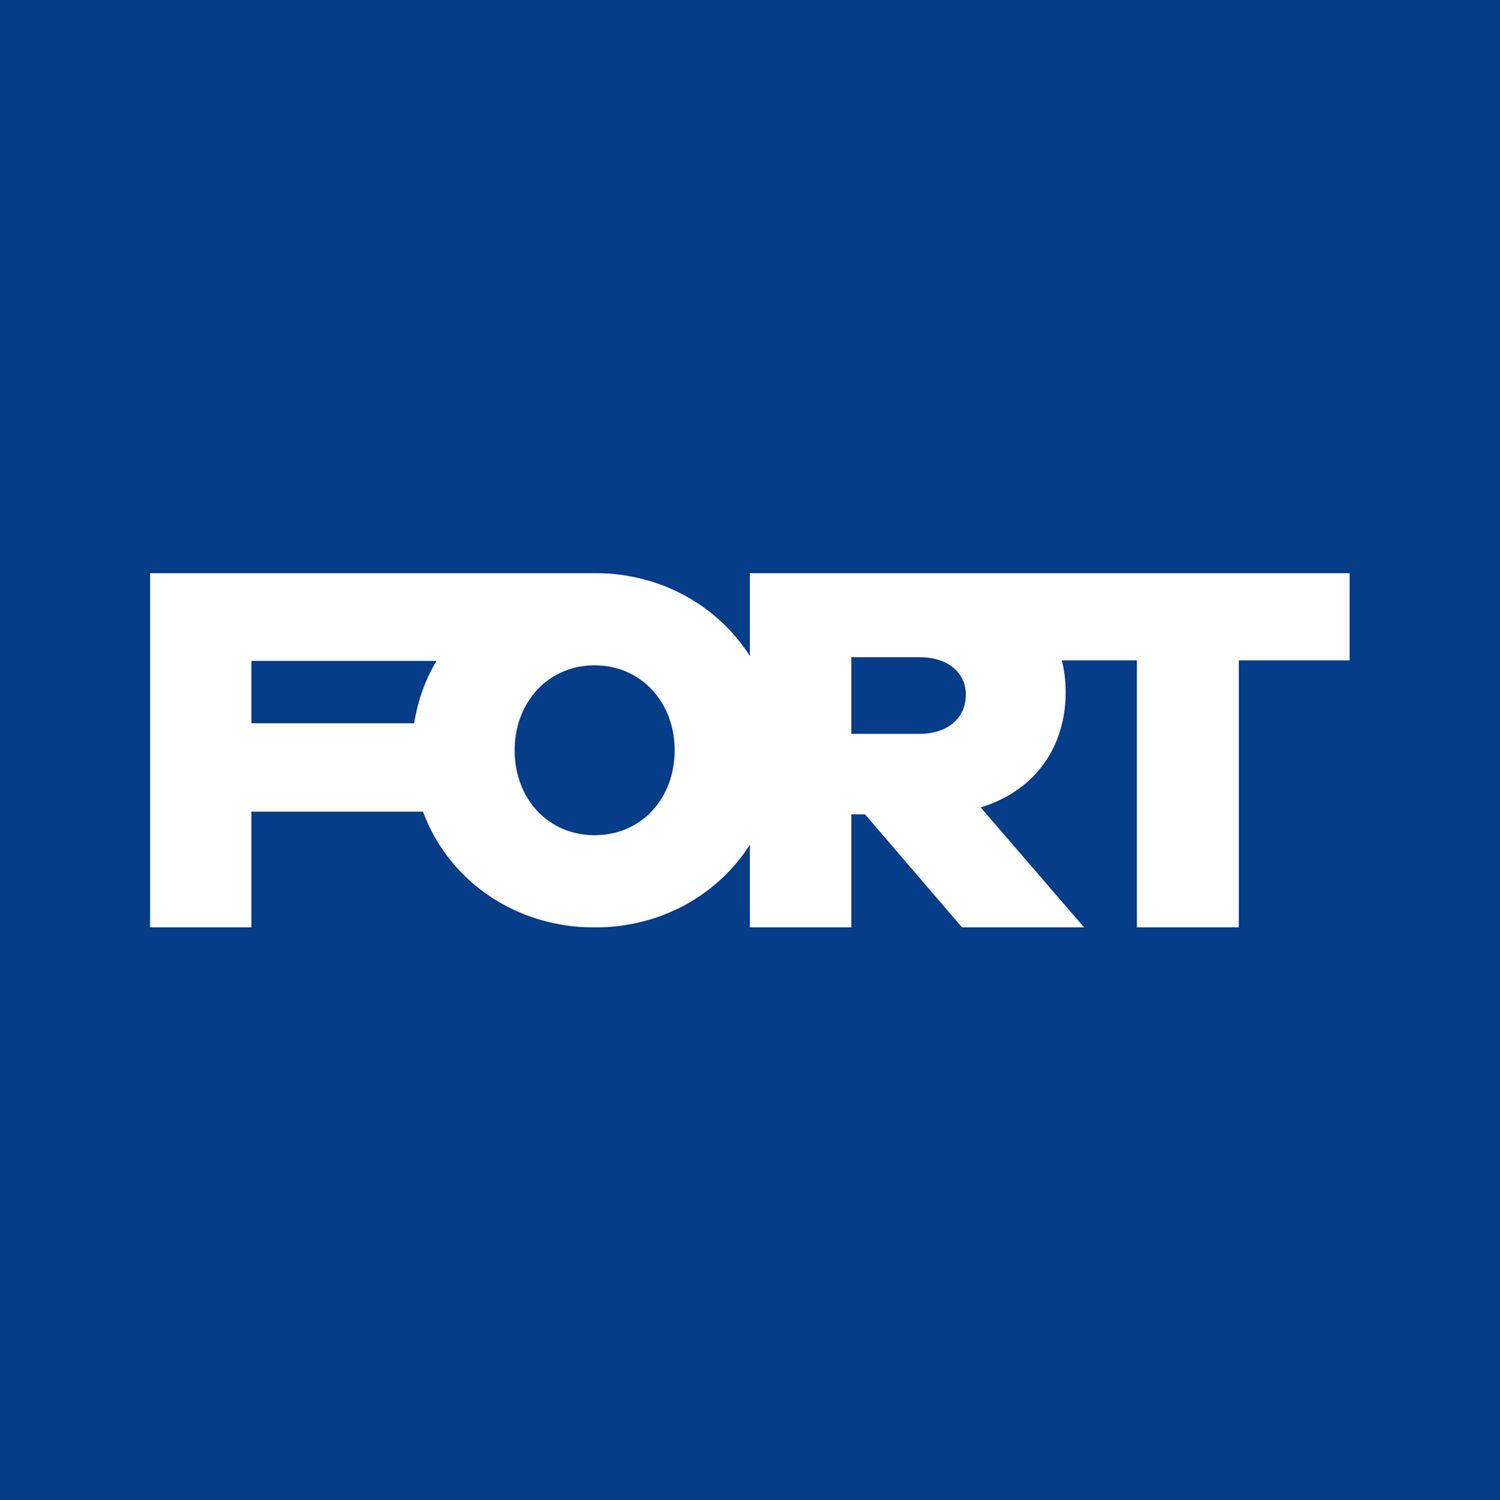 FORT Robotics Logo for active job listings